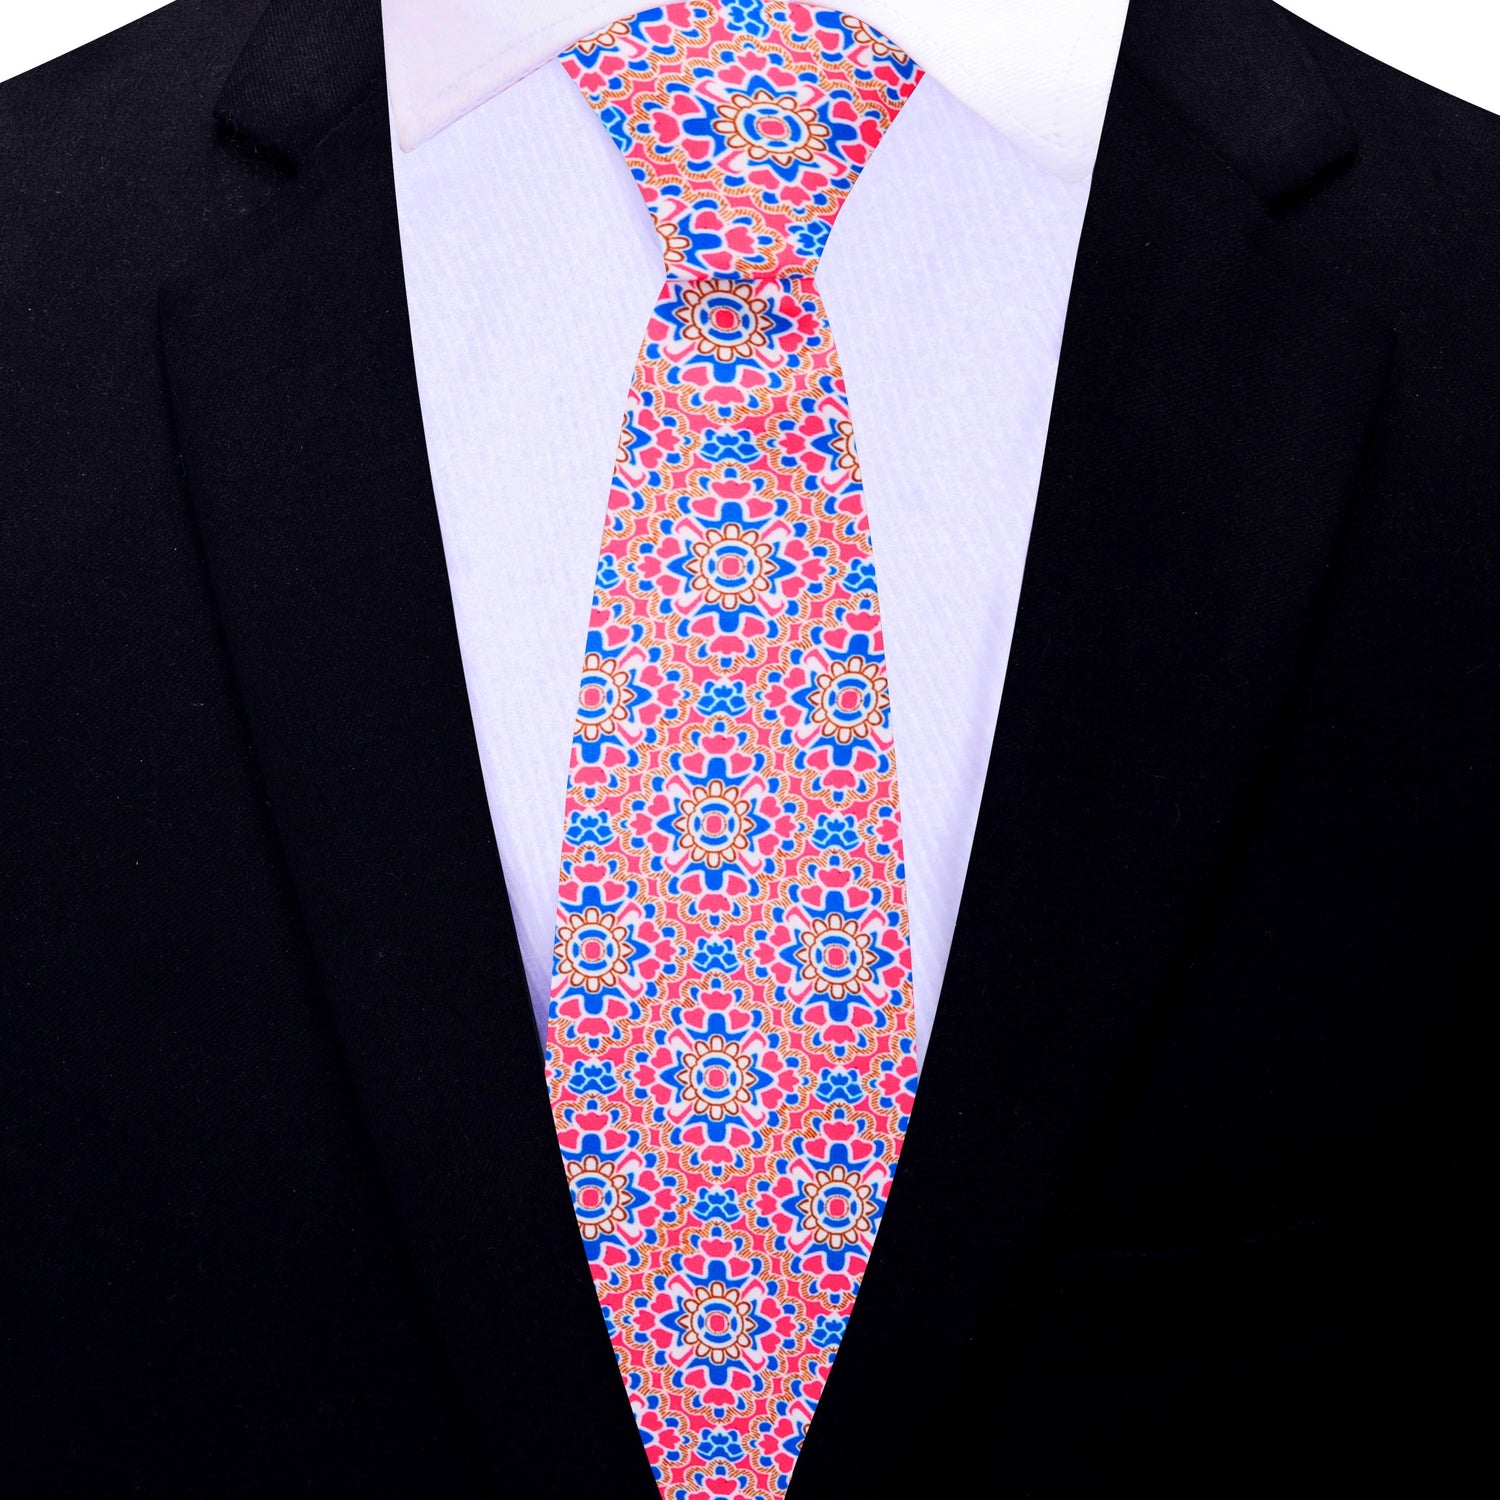 Thin Tie: Candied Rose, Blue, White Mosaic Tie